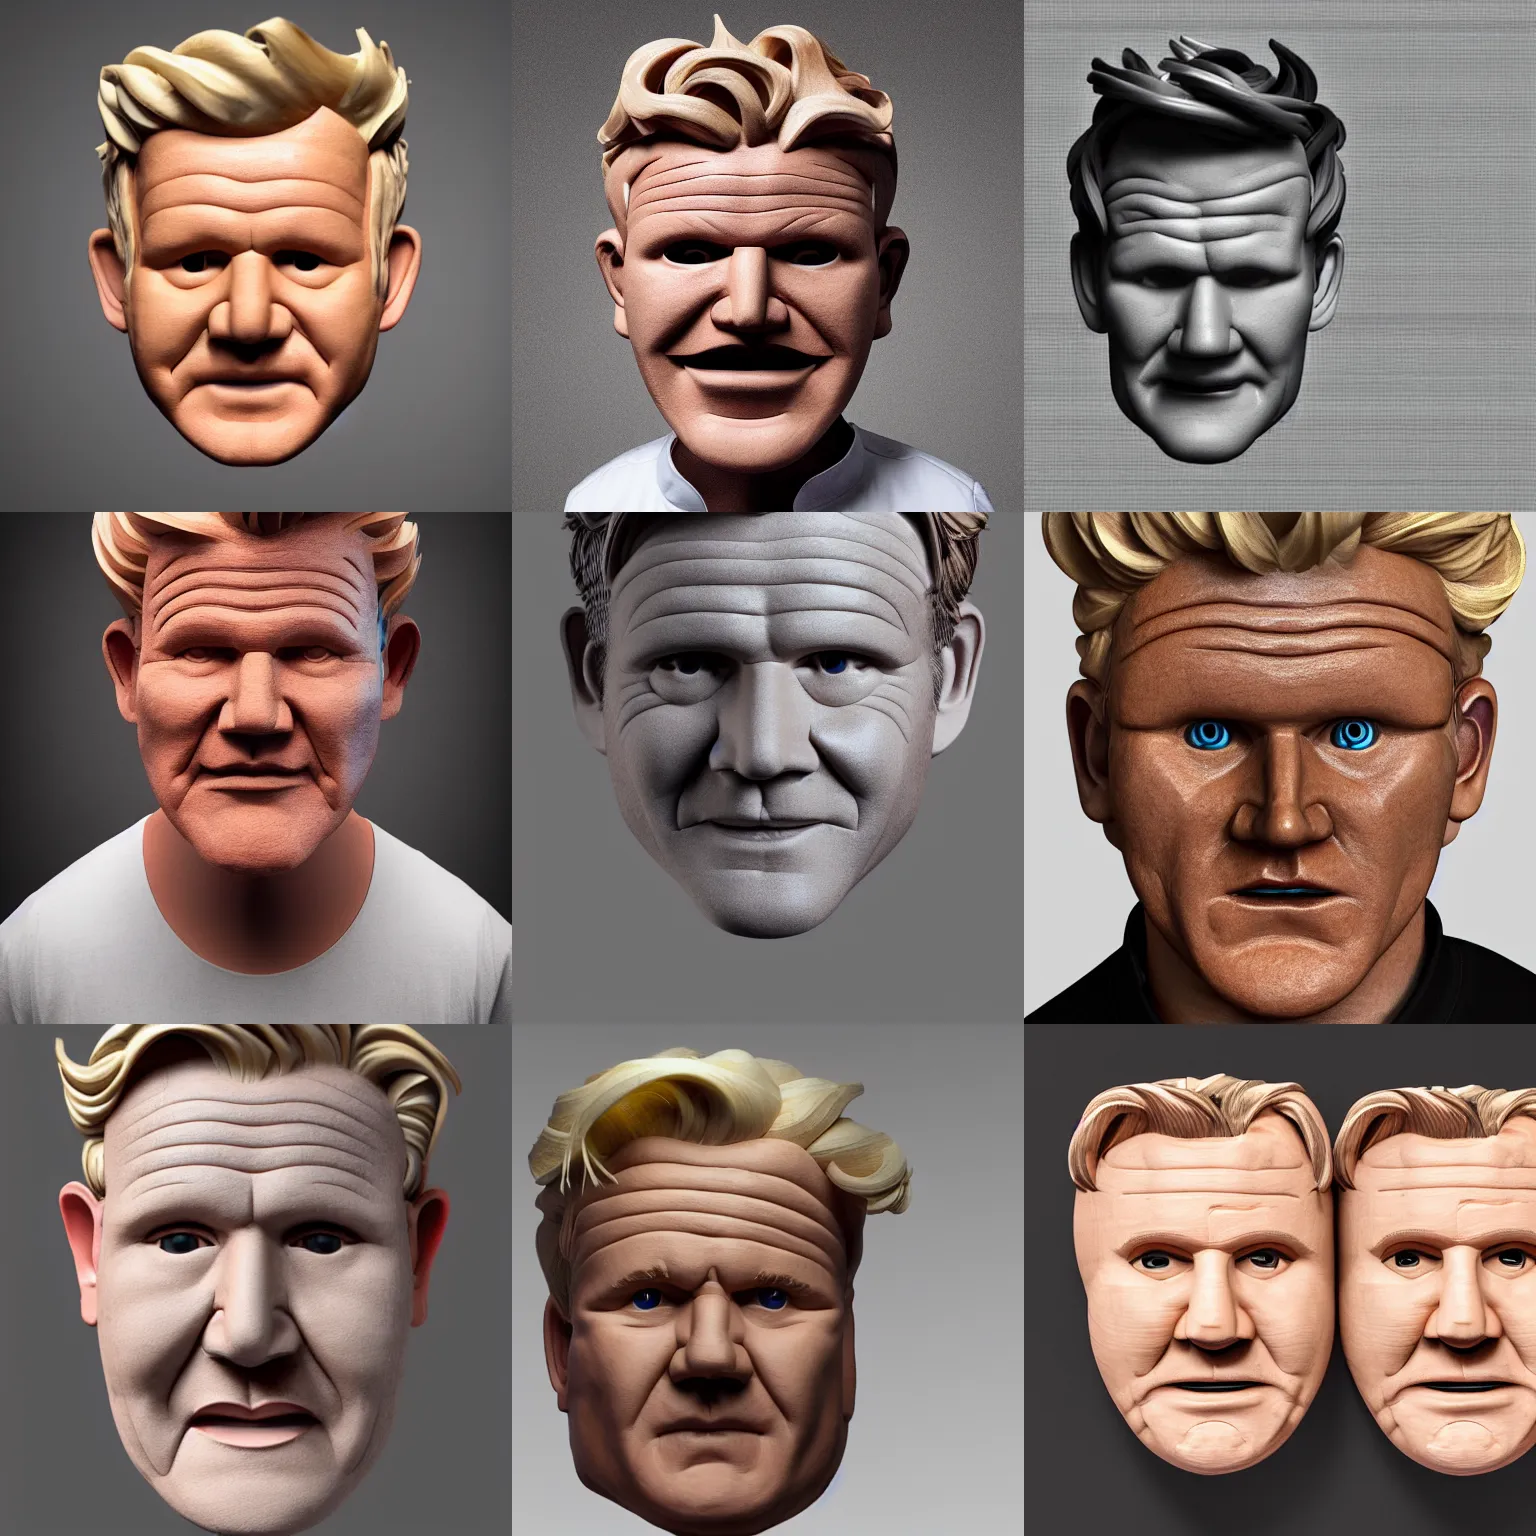 David Beckham statue that 'looks like Gordon Ramsay' prompts